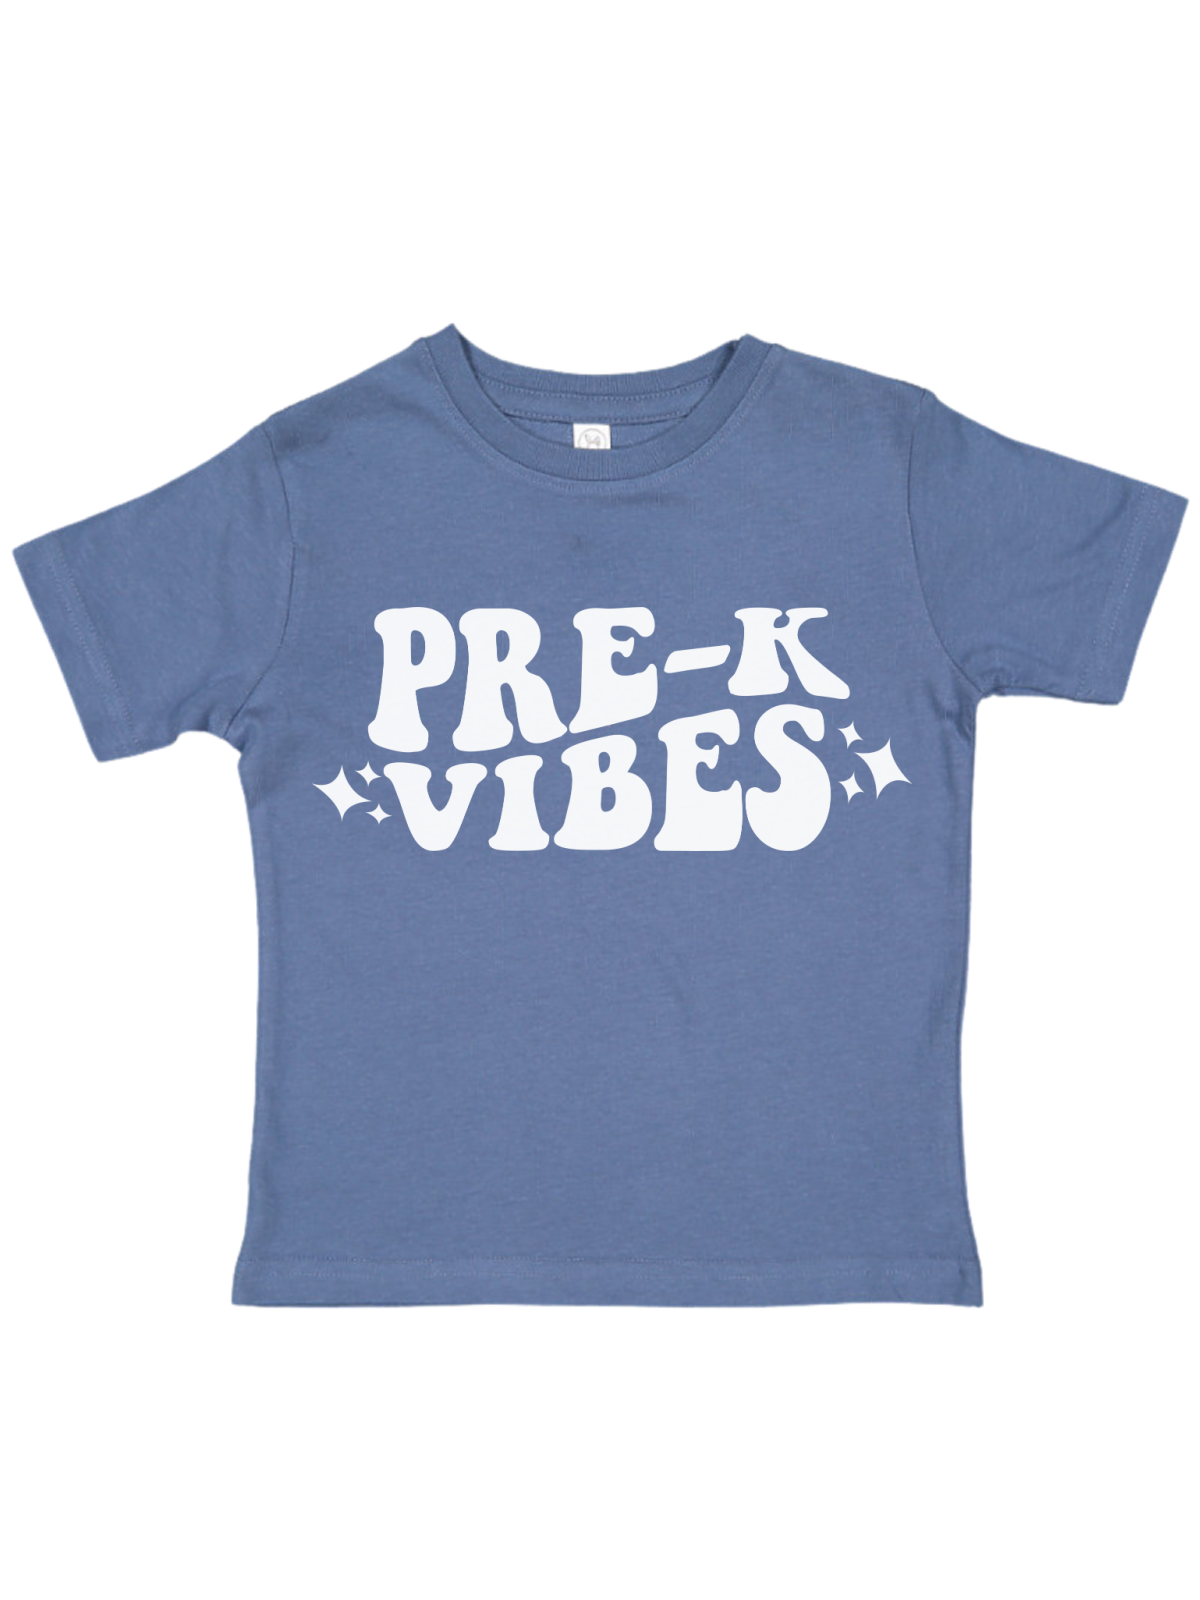 Pre-K Vibes Kids Shirt in Indigo Blue